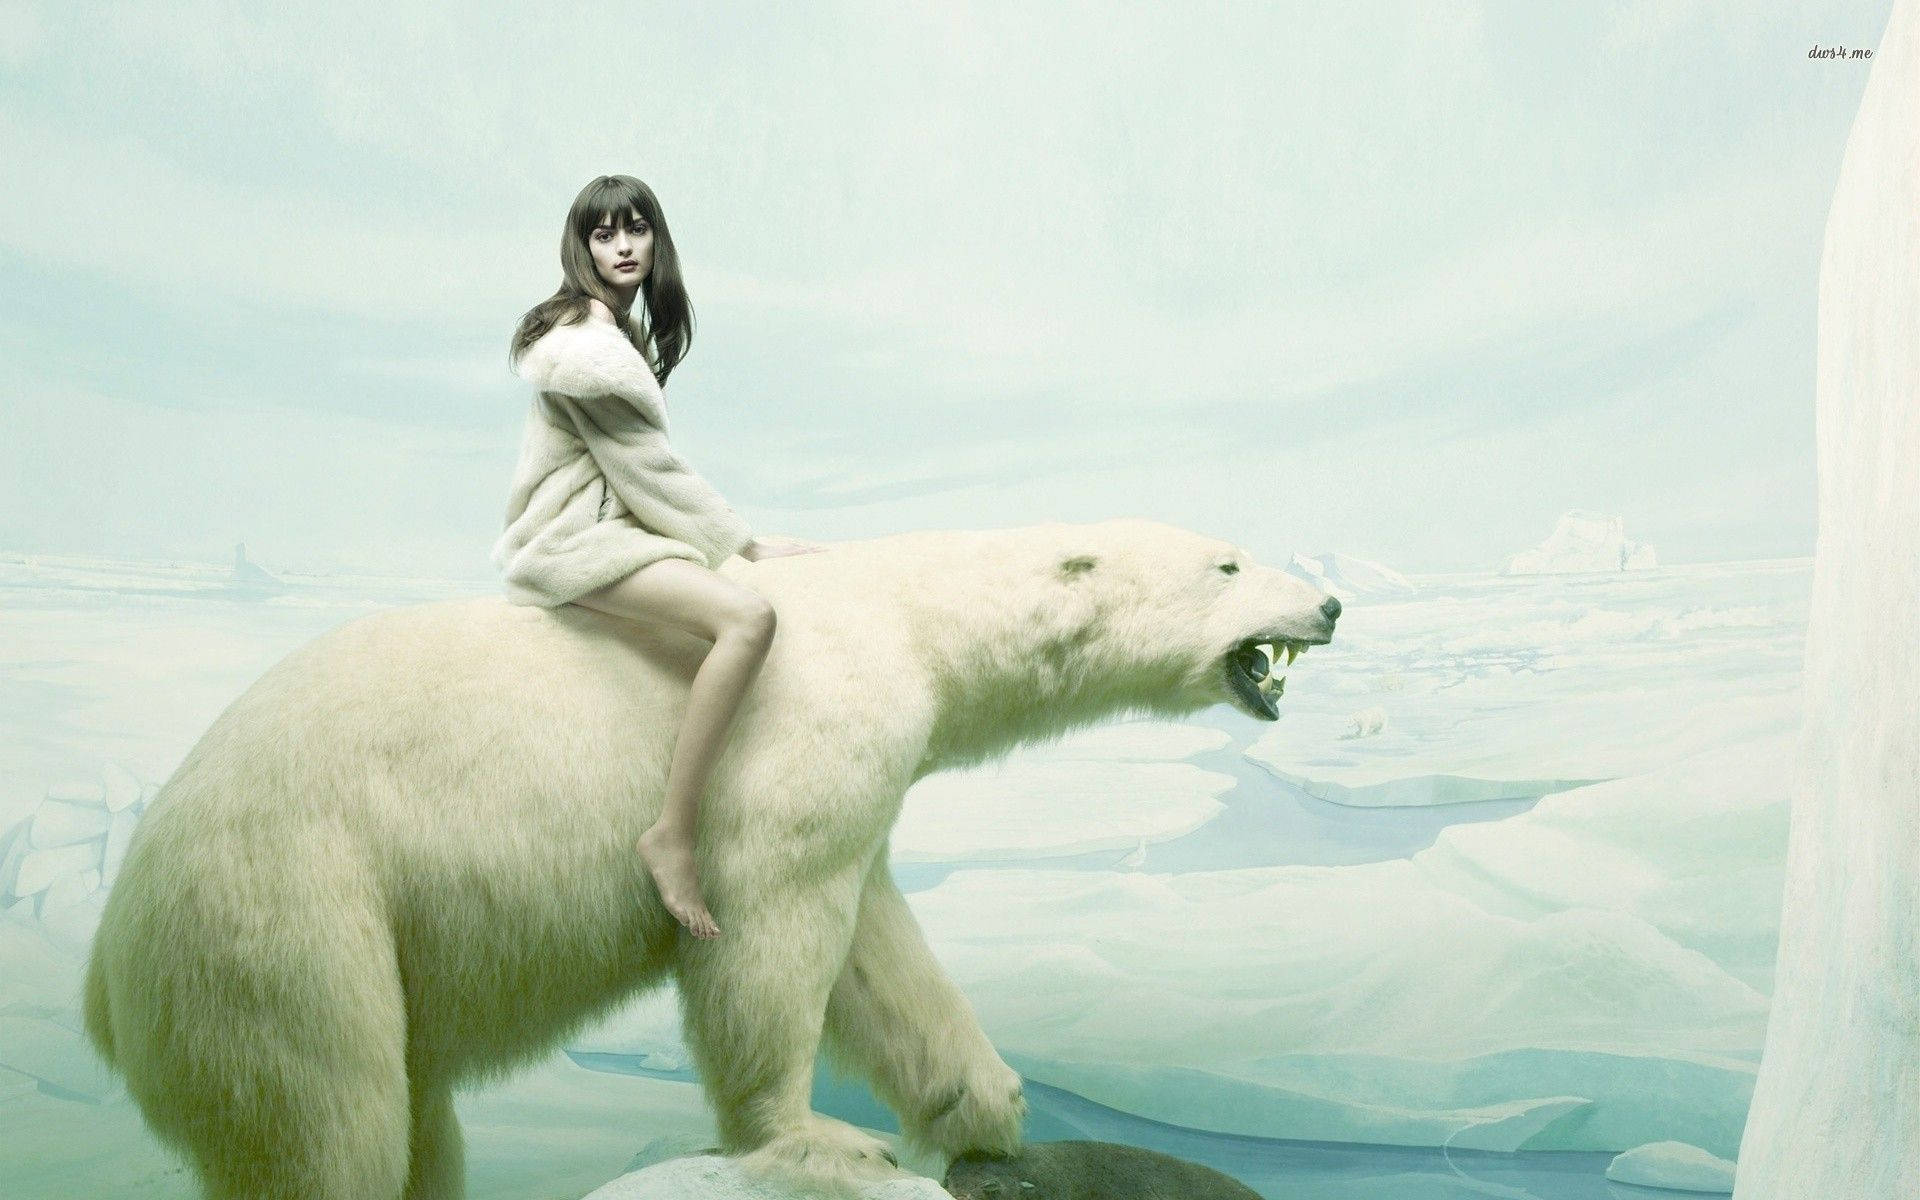 Woman Riding Polar Bear Background